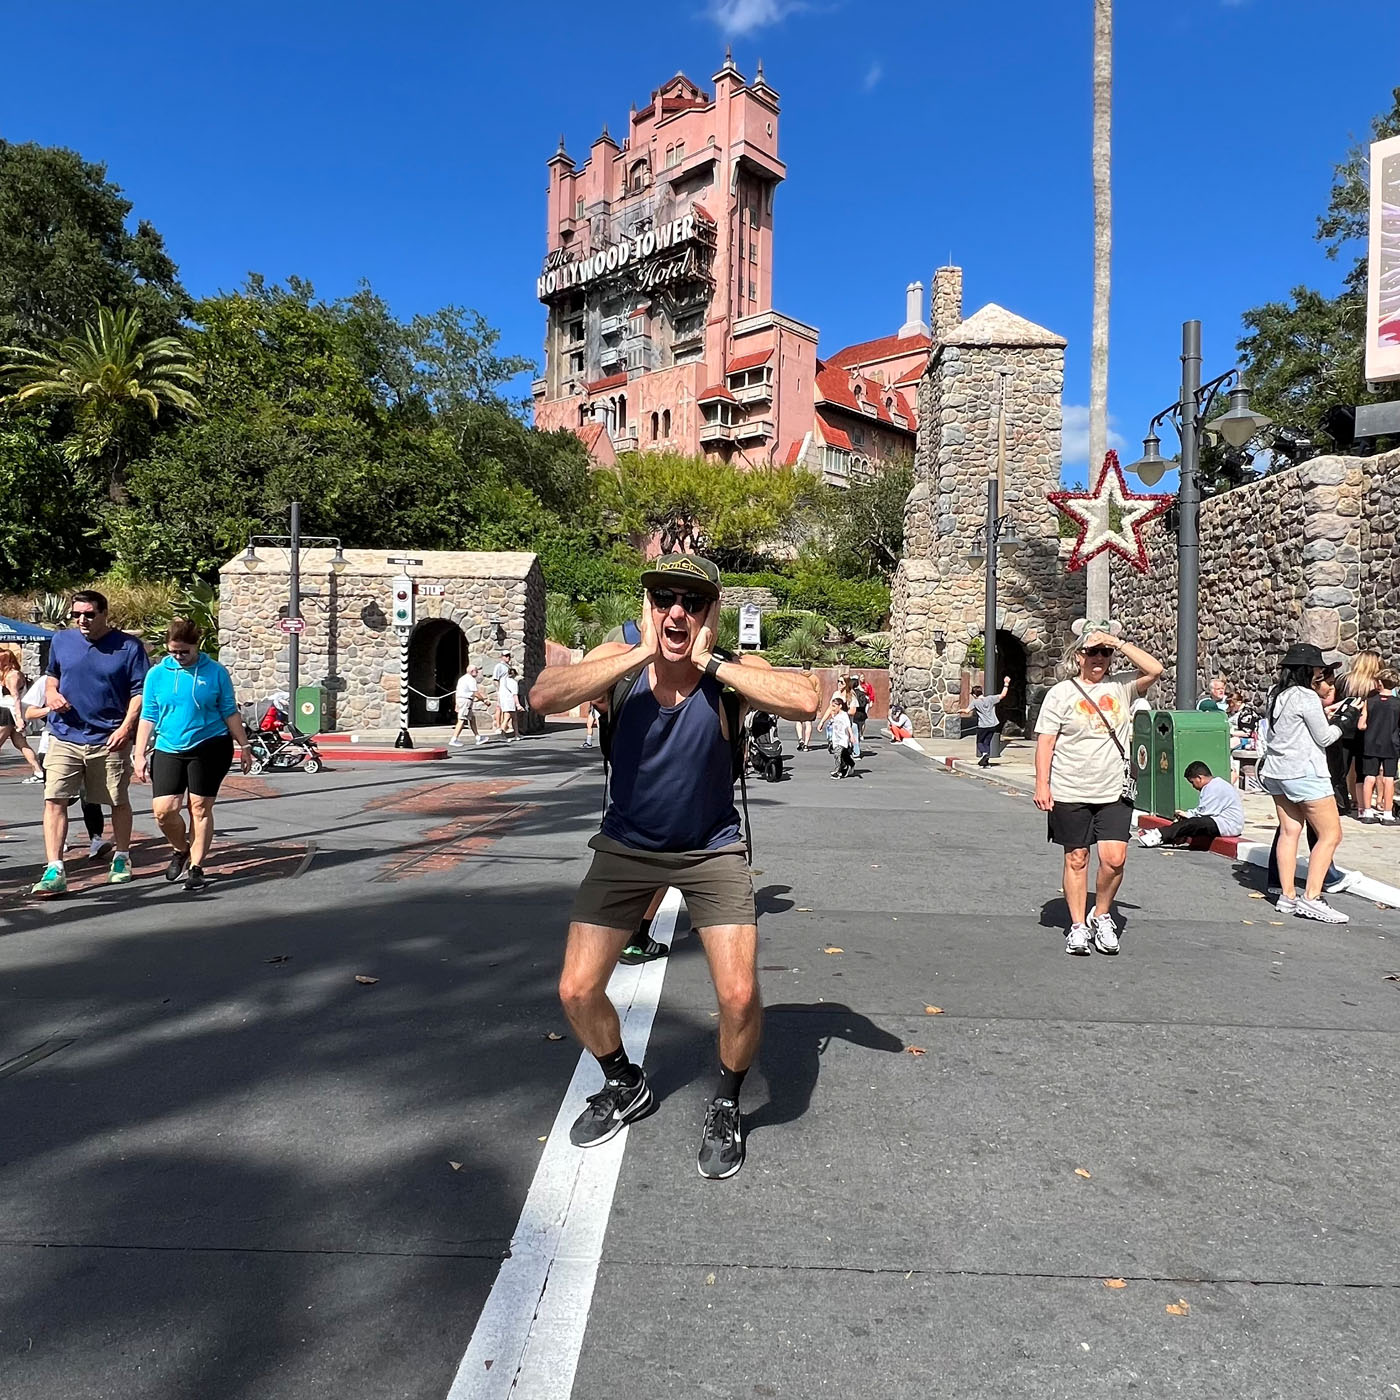 Disney Attractions - Tower of Terror